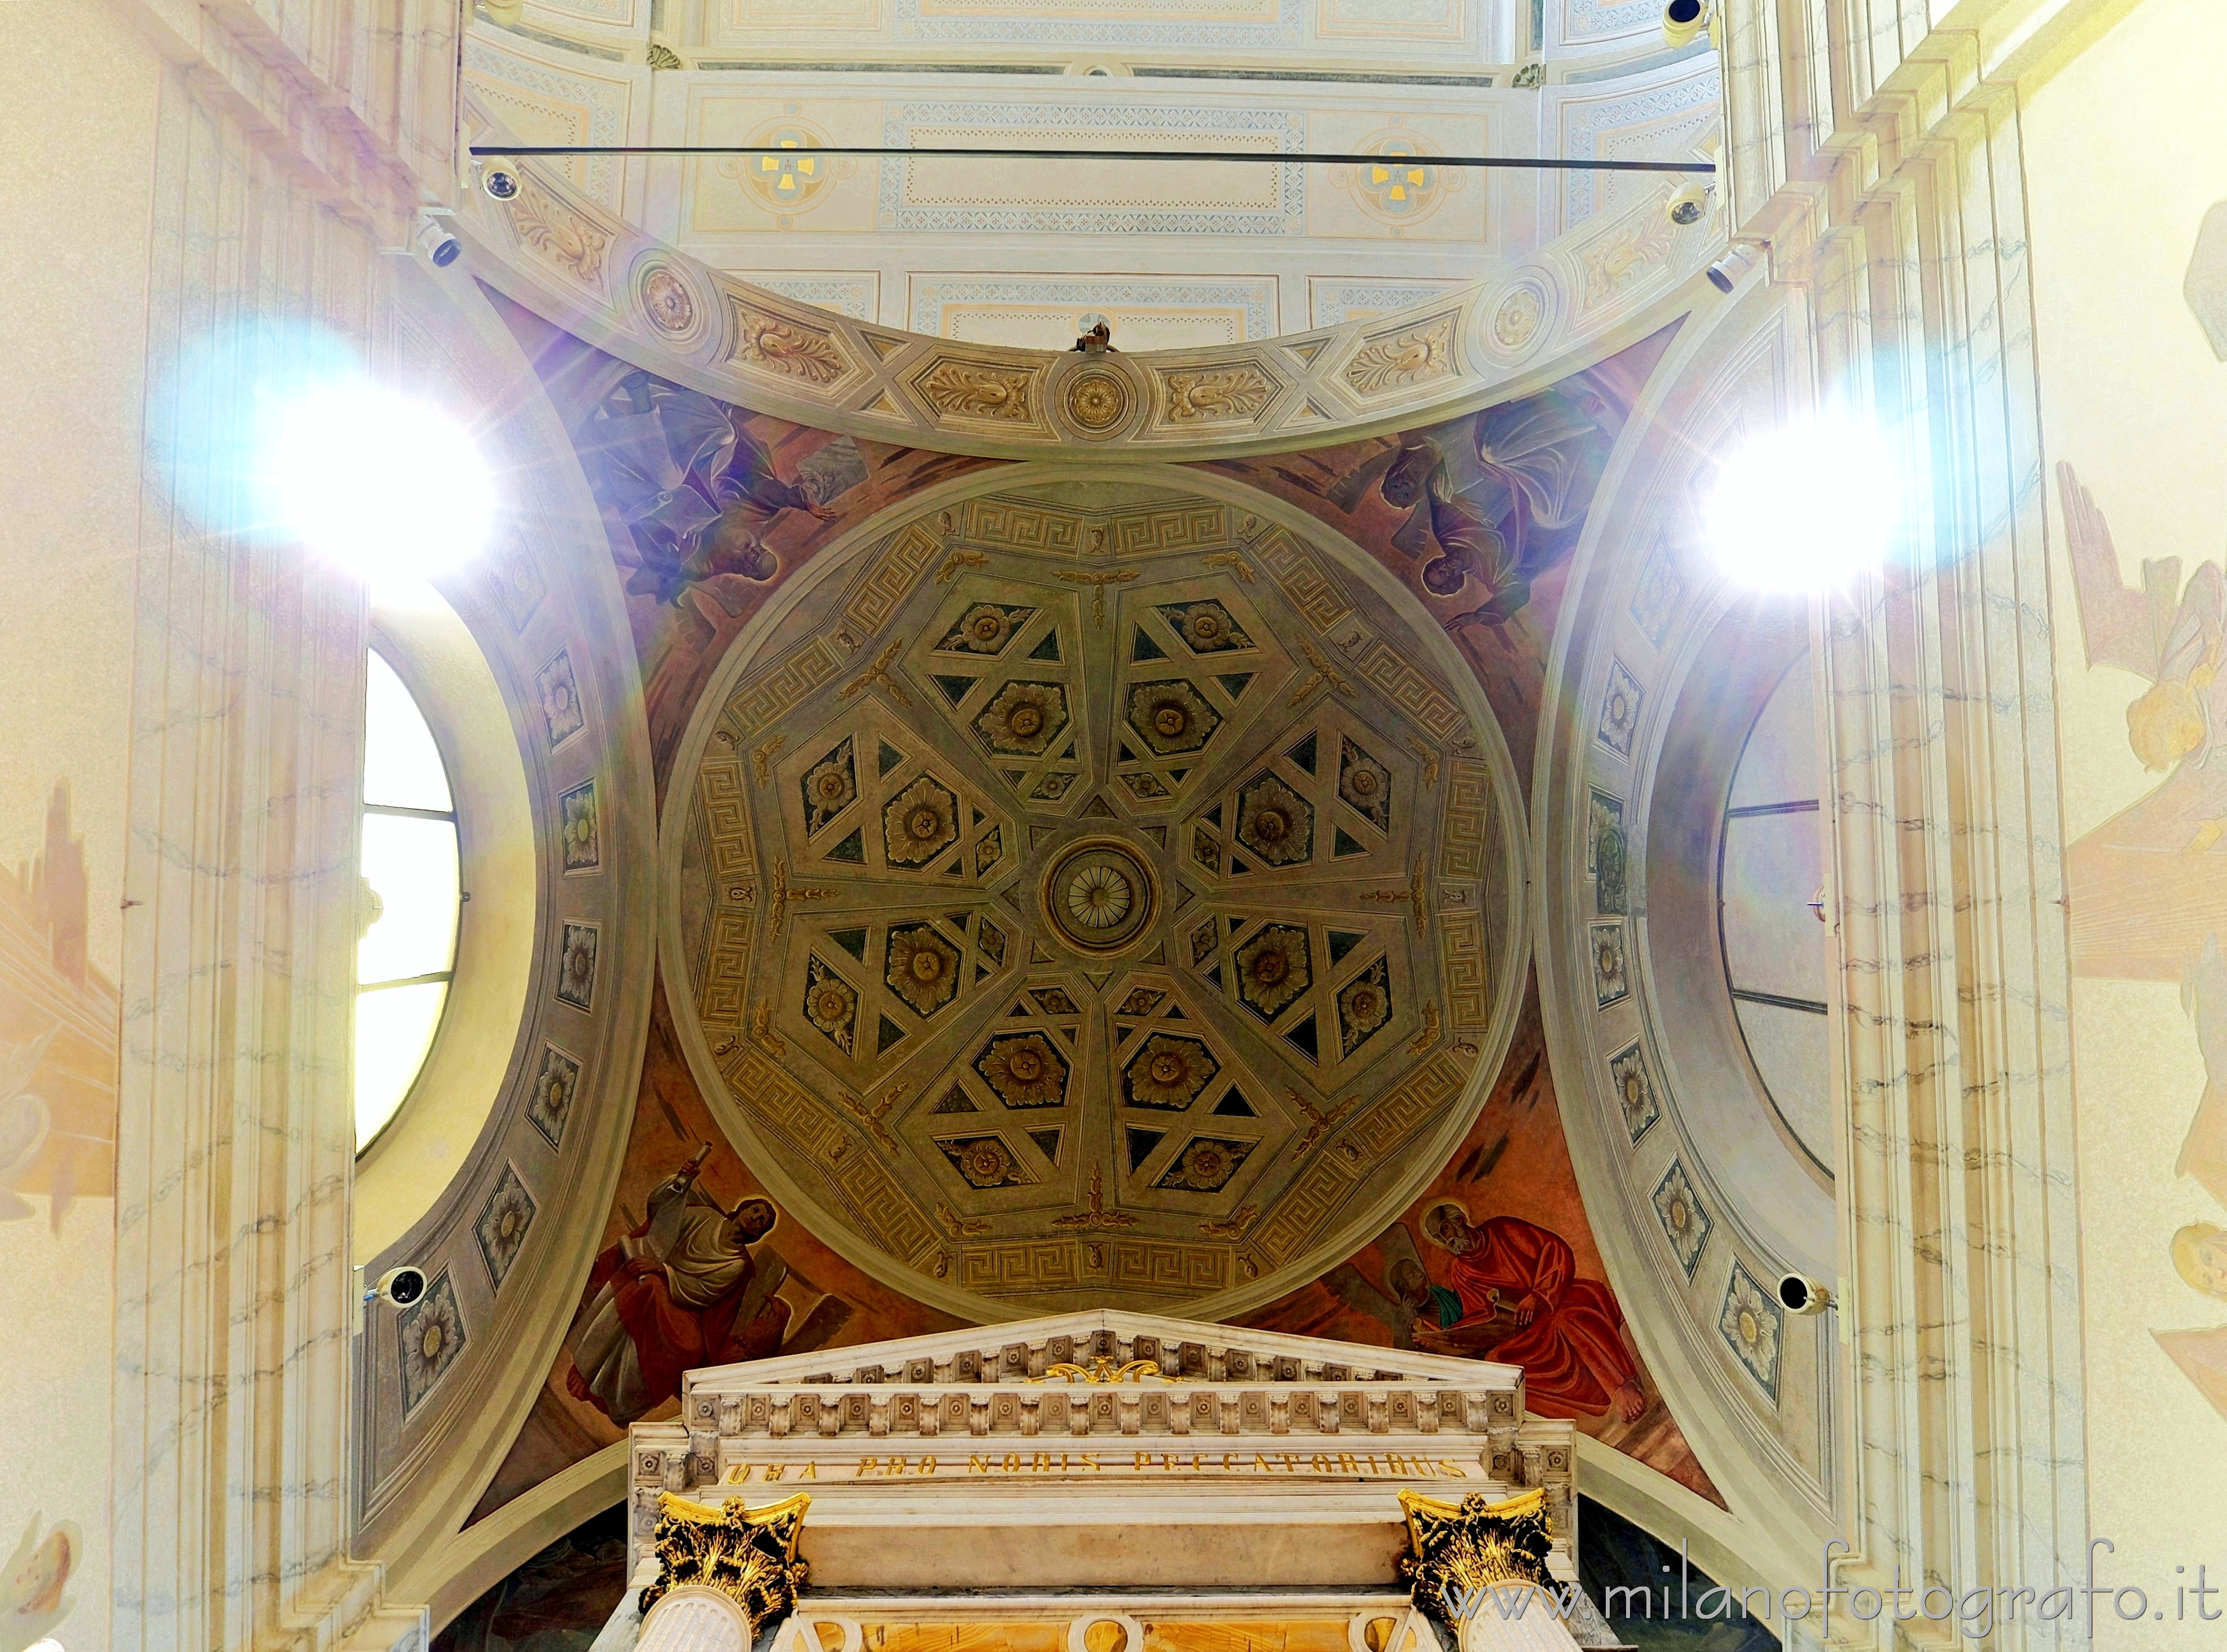 Milan (Italy): Art nouveau ceiling of the presbytery of the Church of Sant Ambrogio ad Nemus - Milan (Italy)